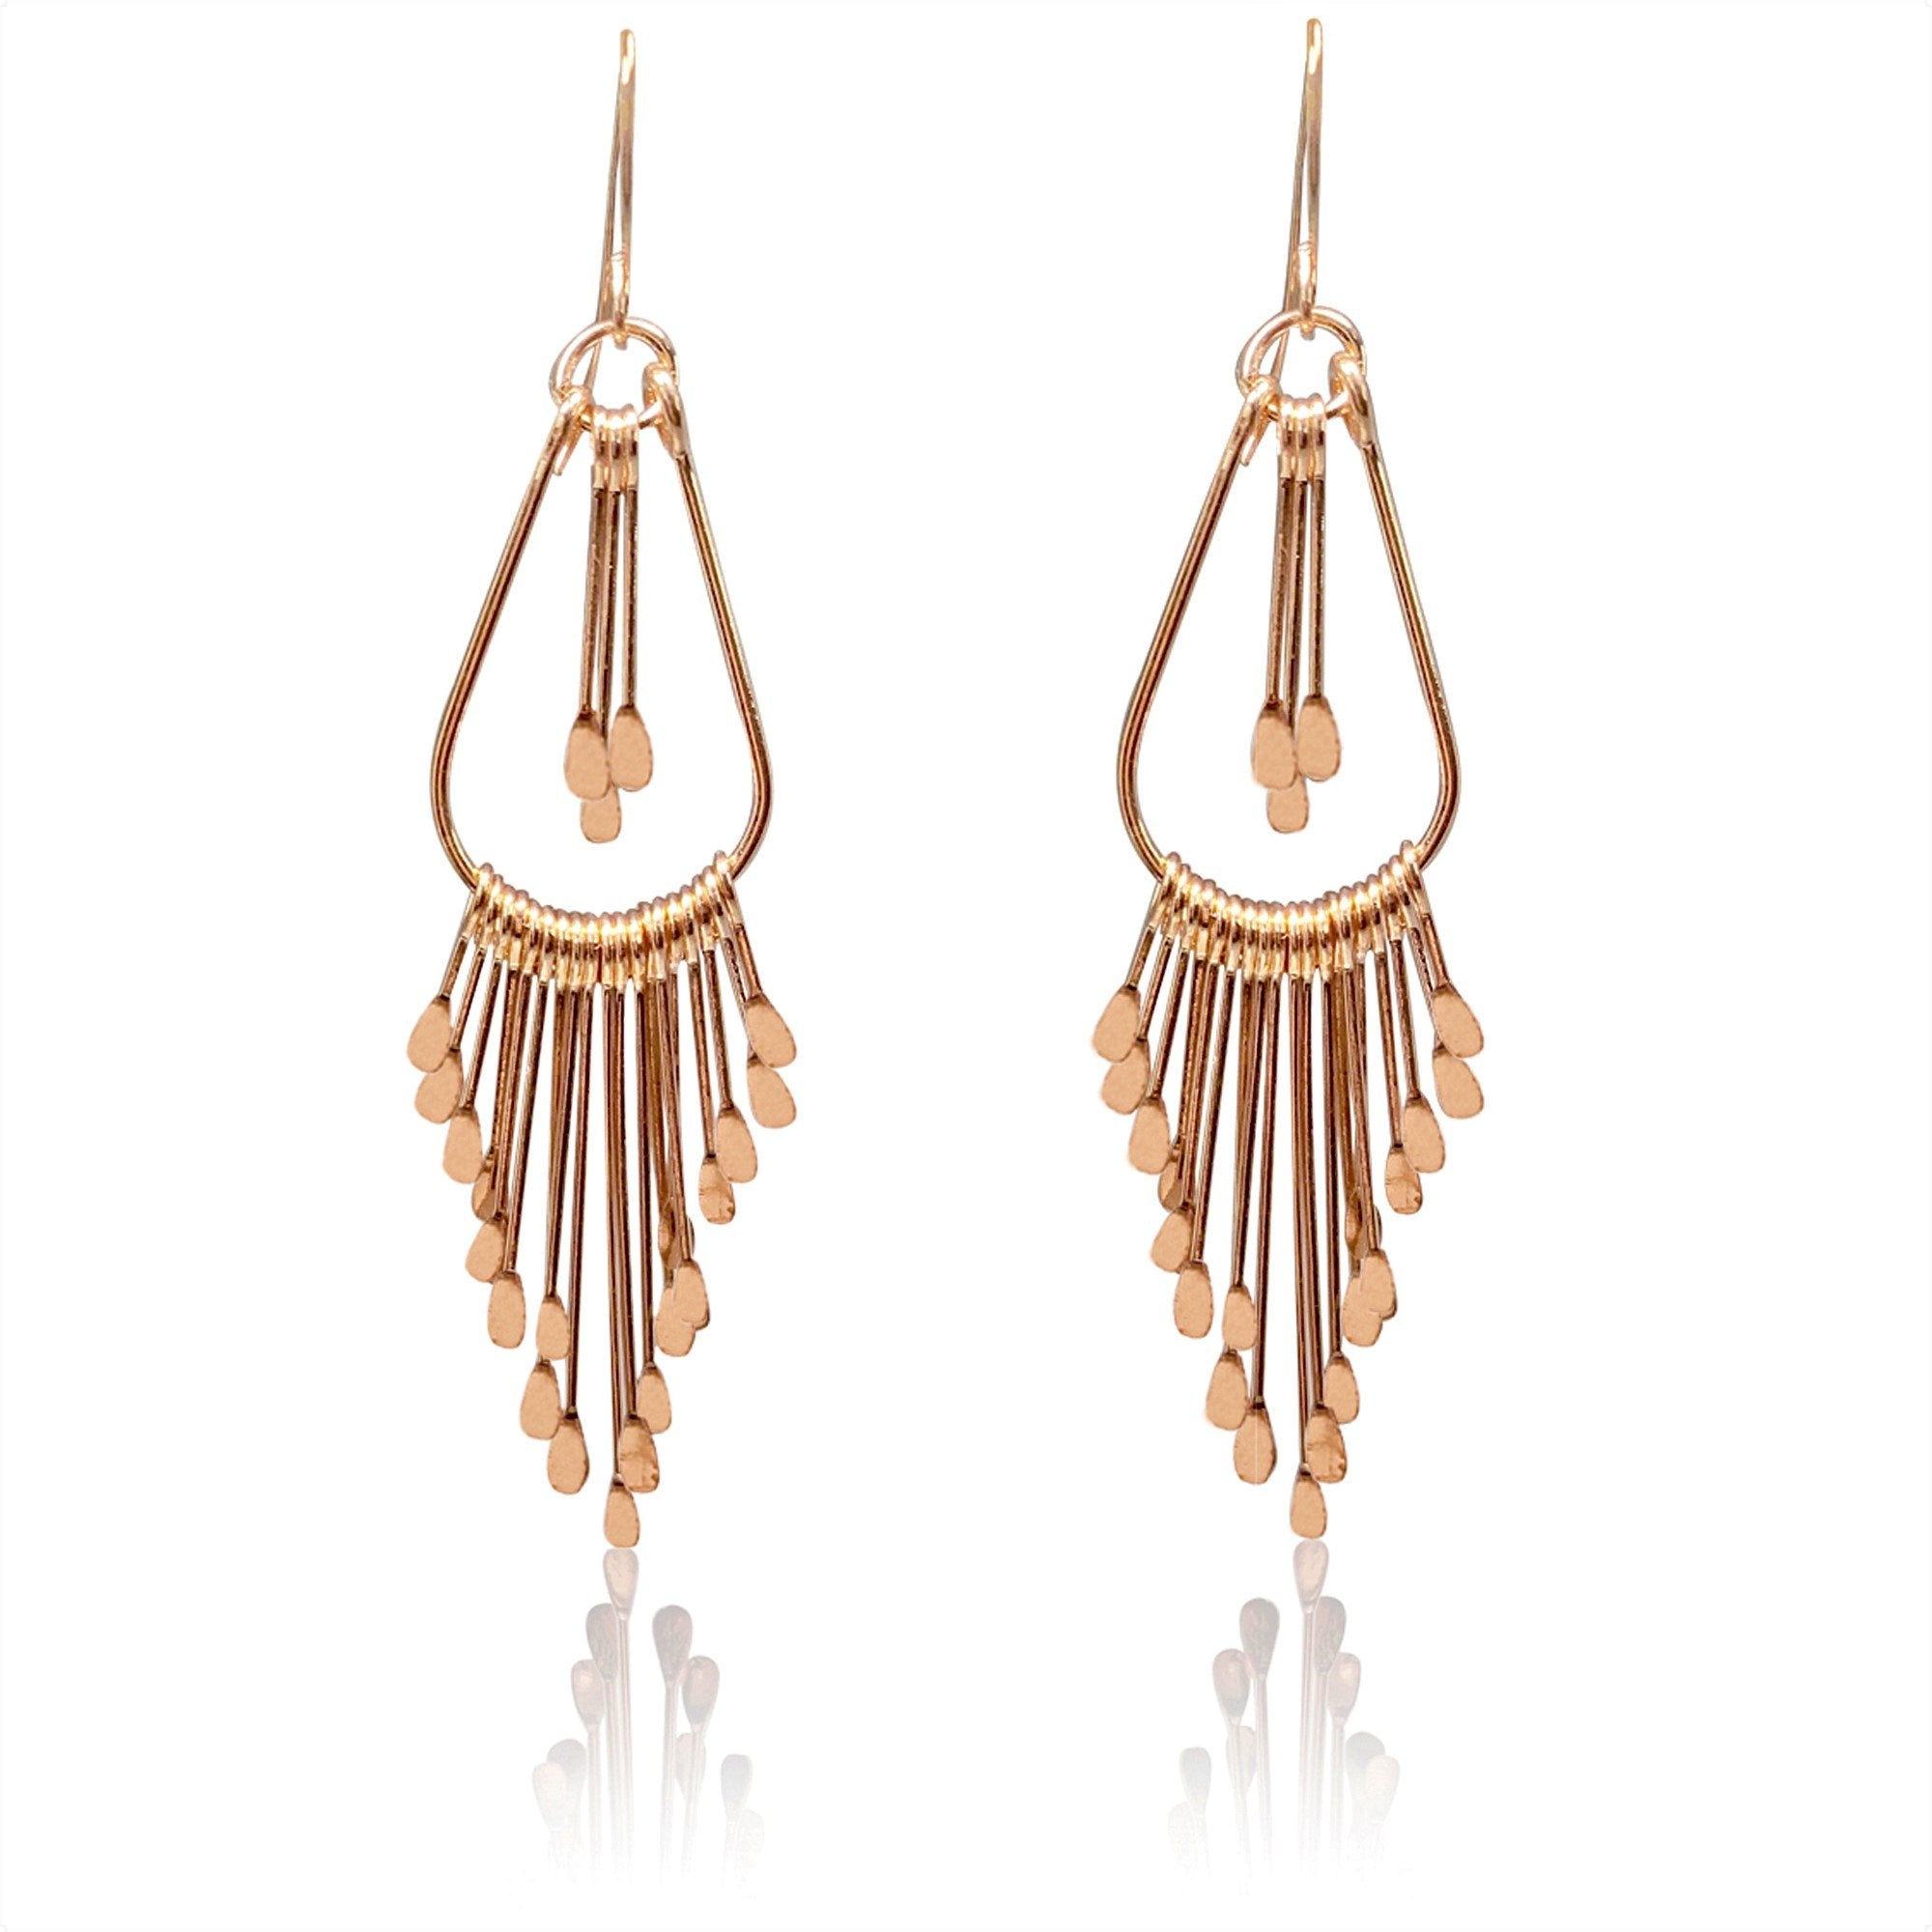 Rose gold color nail design earrings